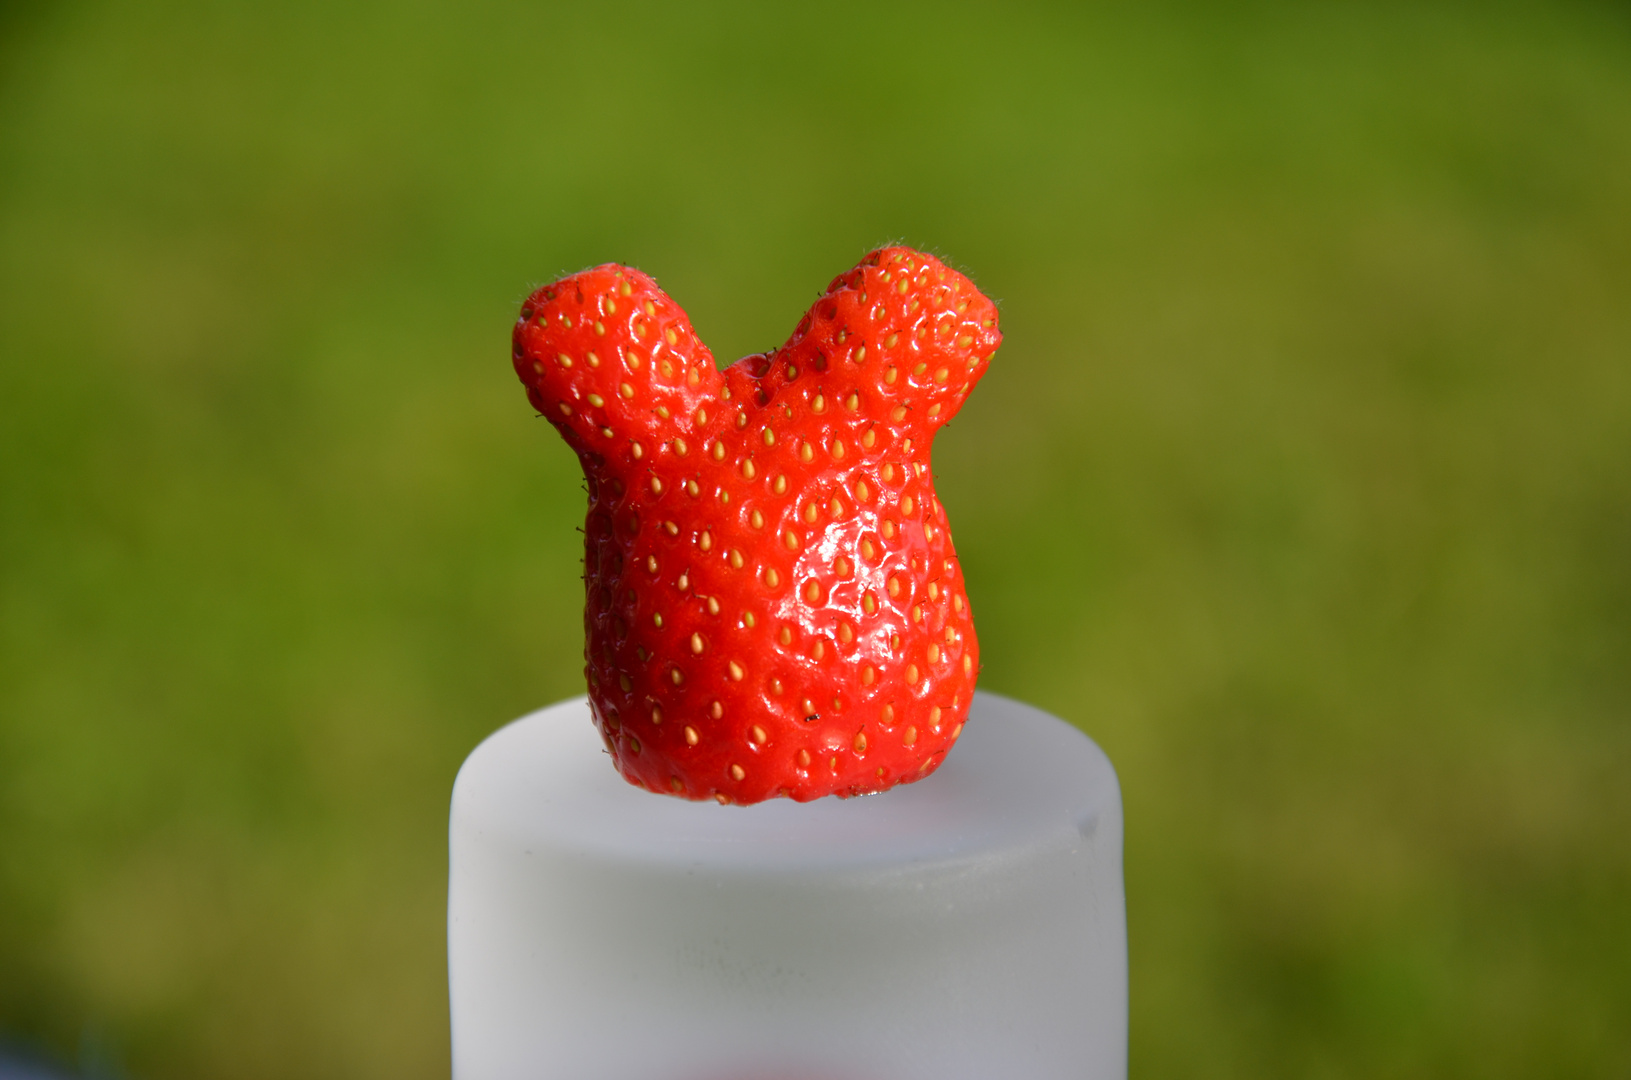 Erdbeere mit Ohren?